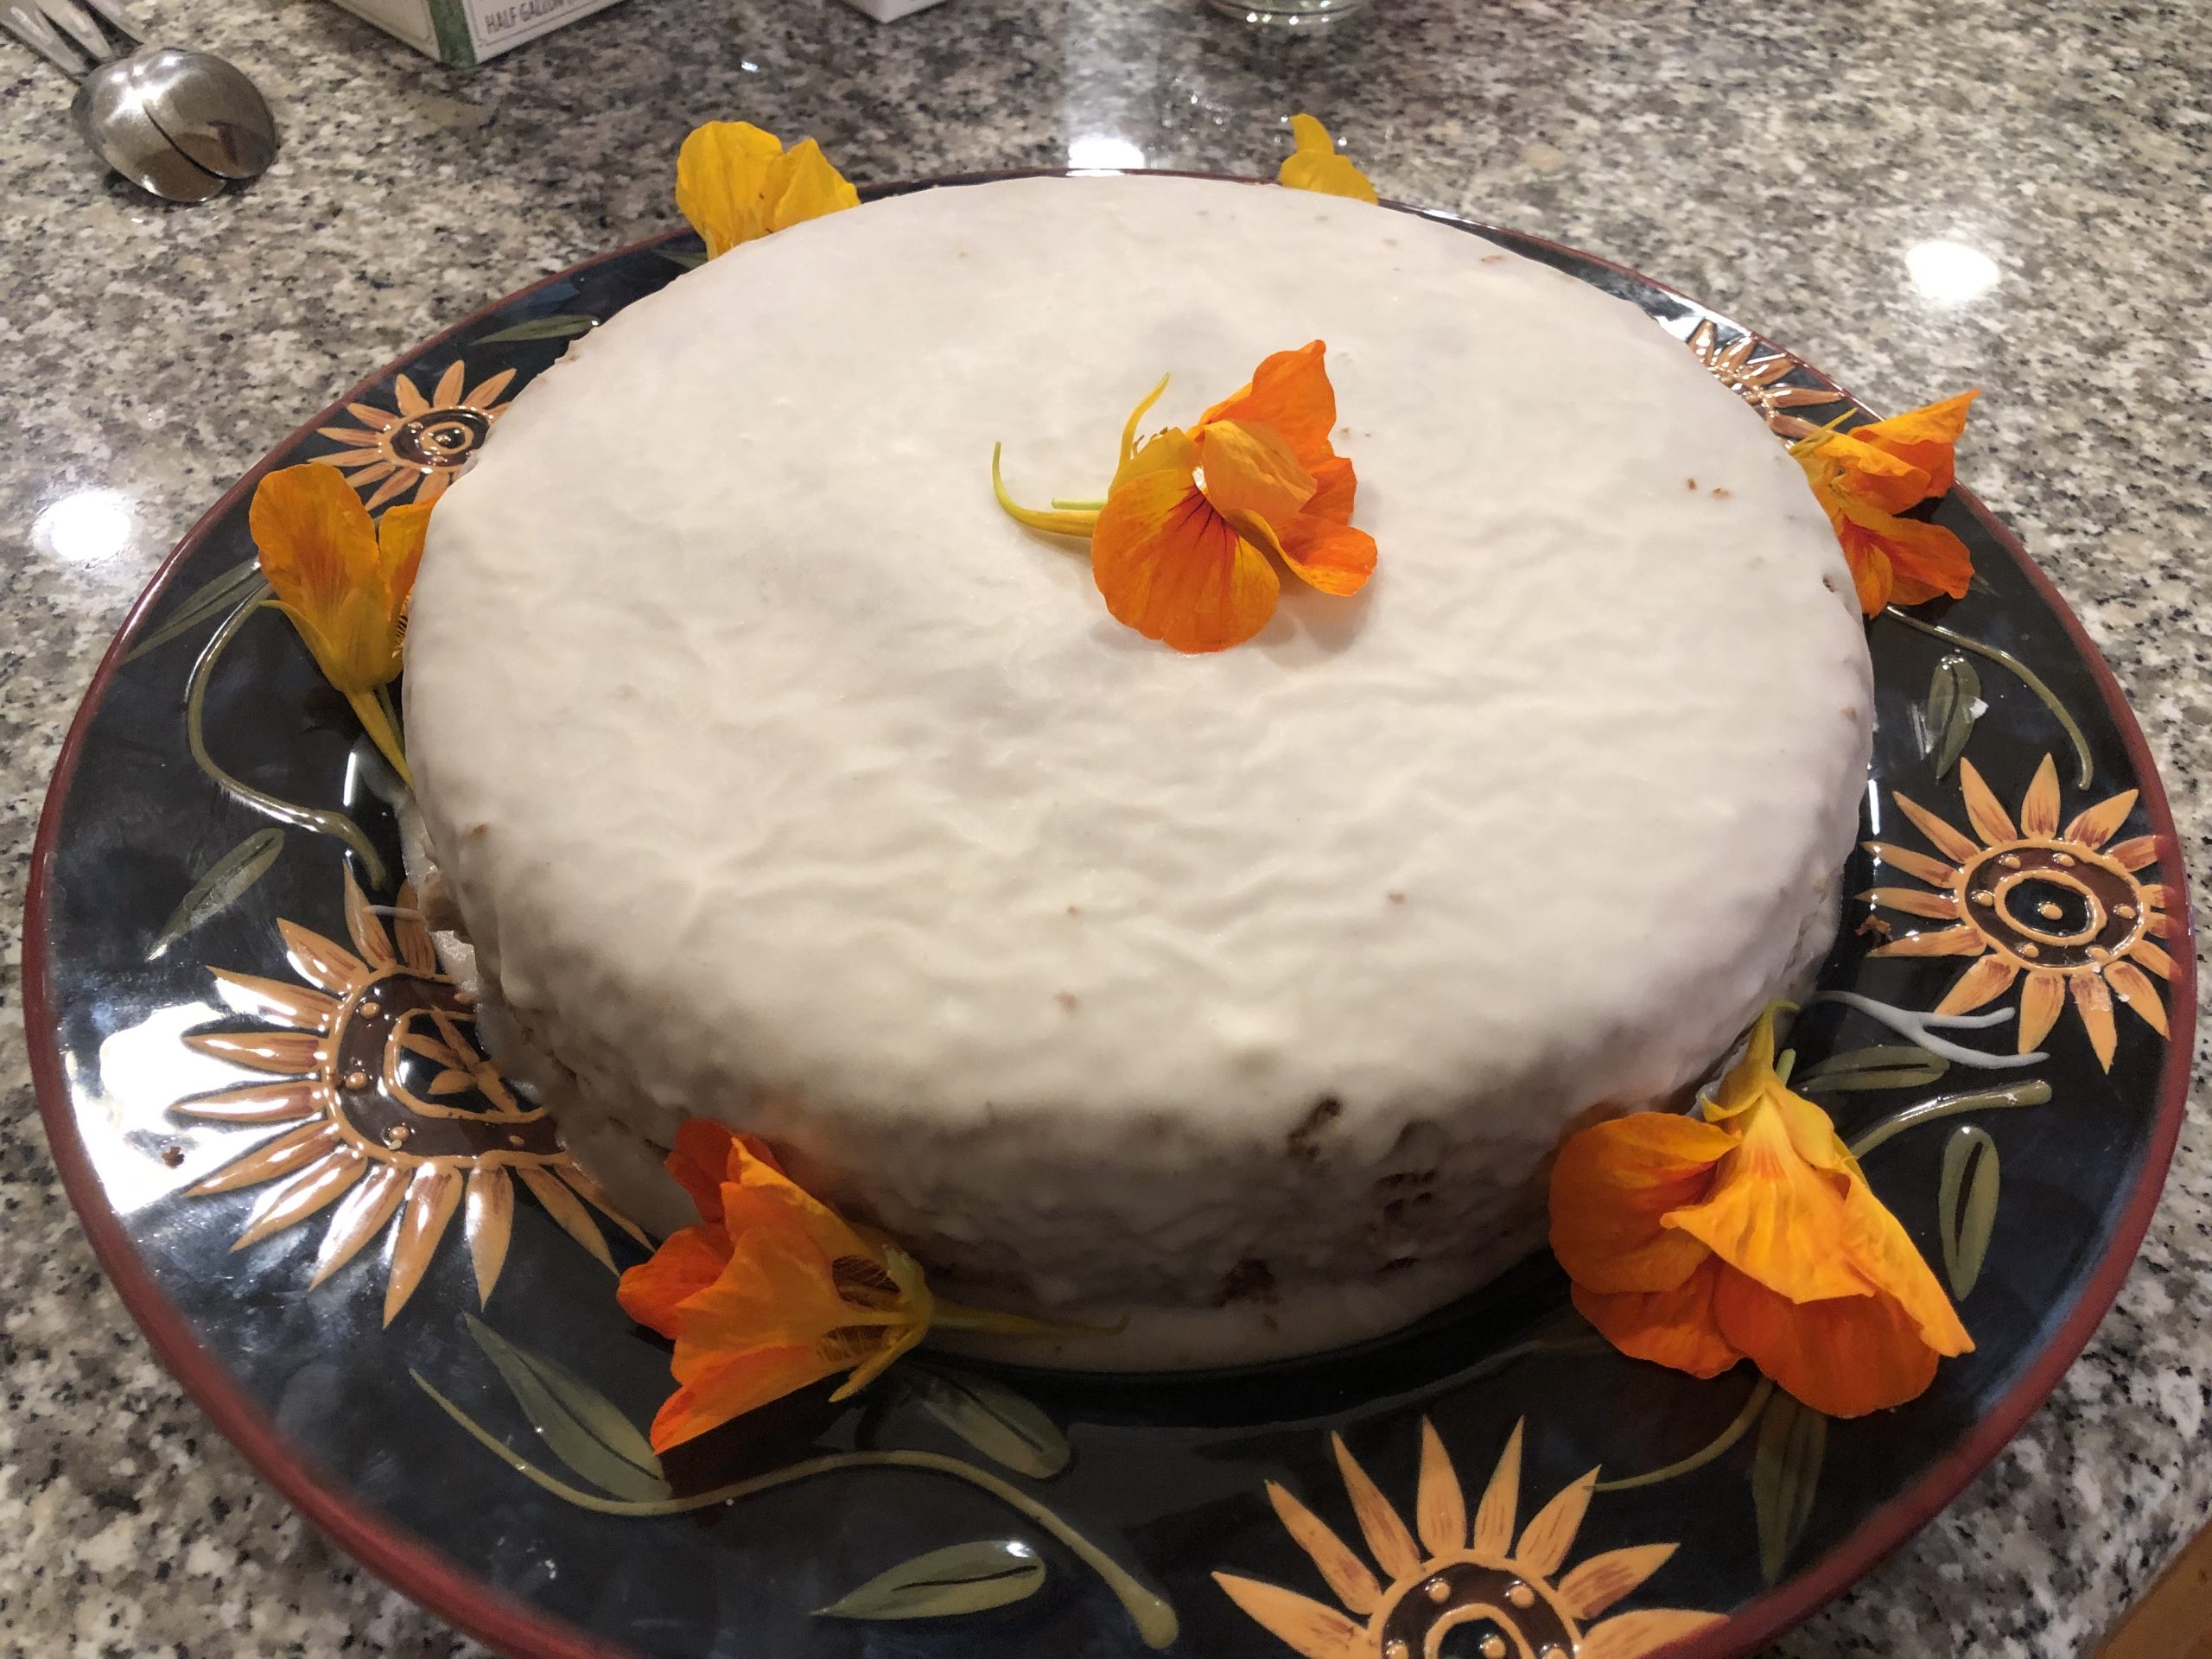 Cake with orange flowers on top